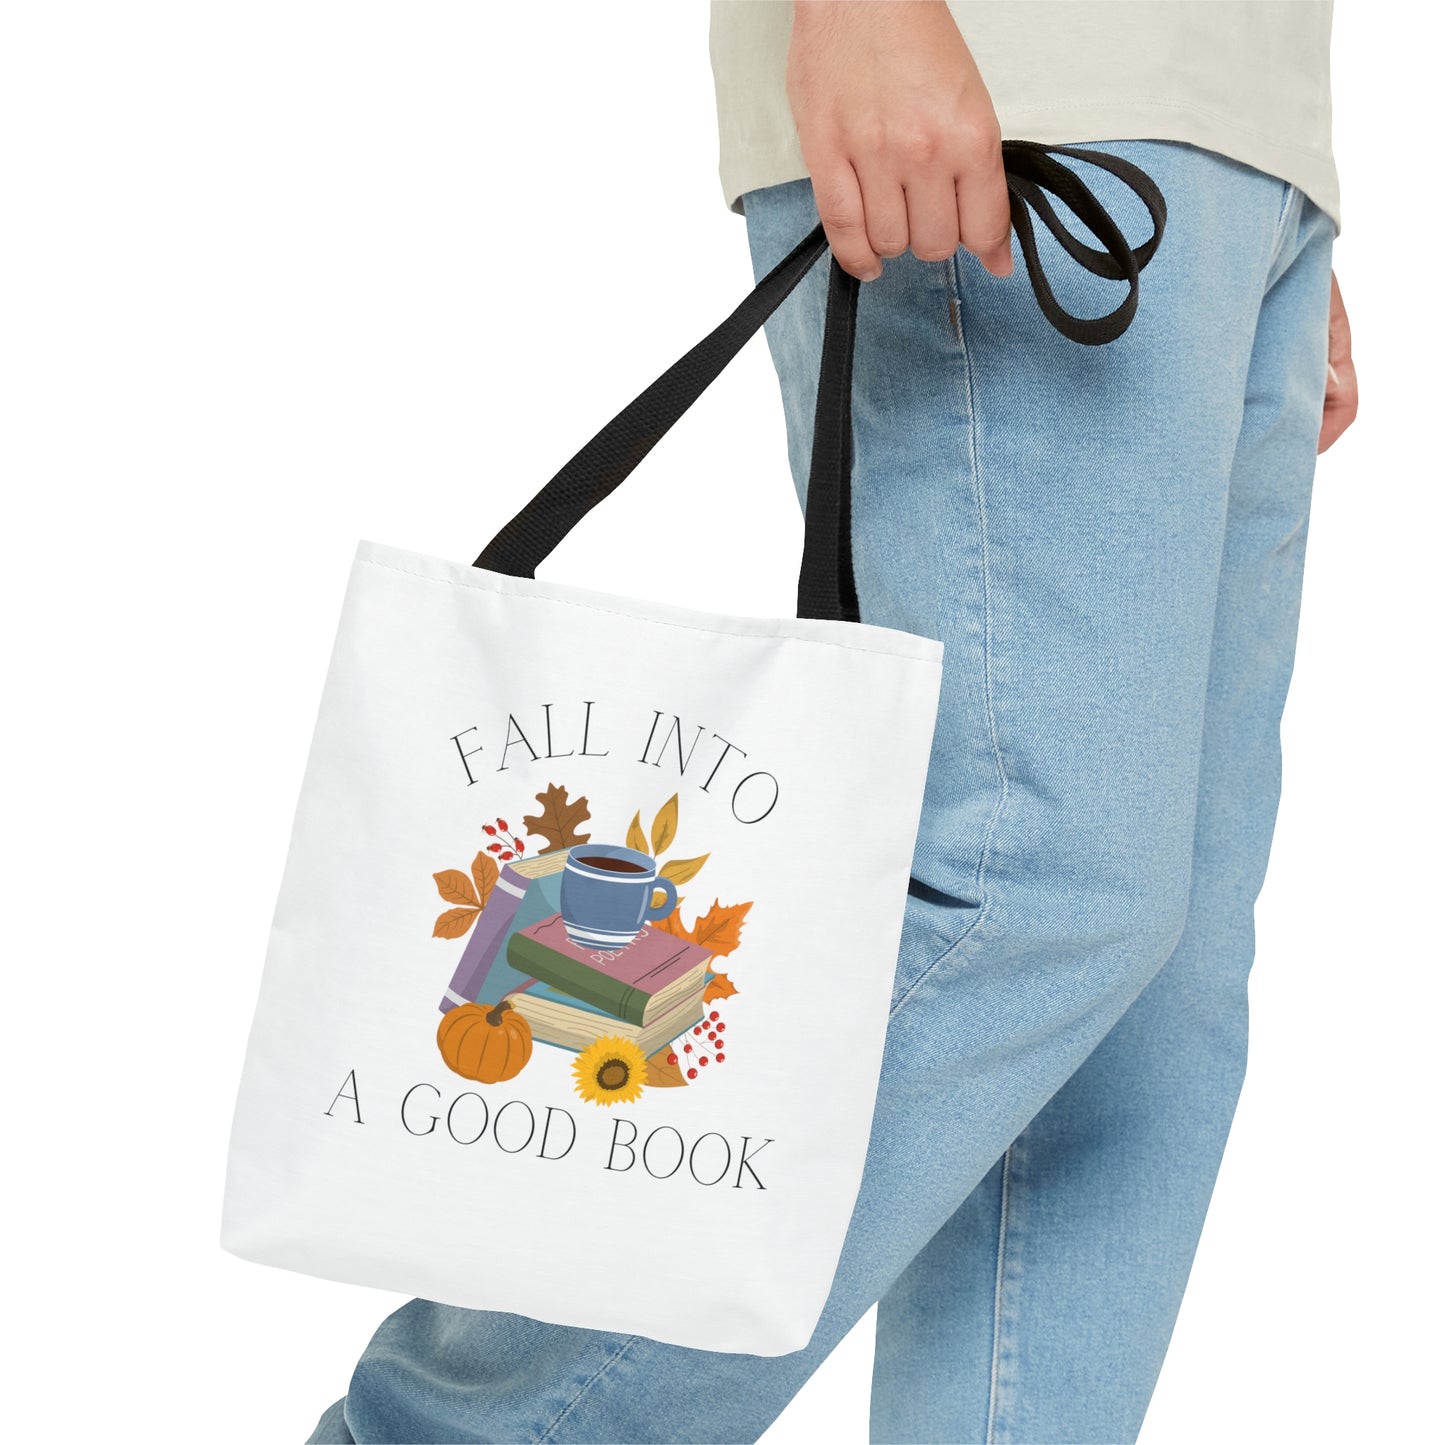 Fall Into A Good Book Tote Bag